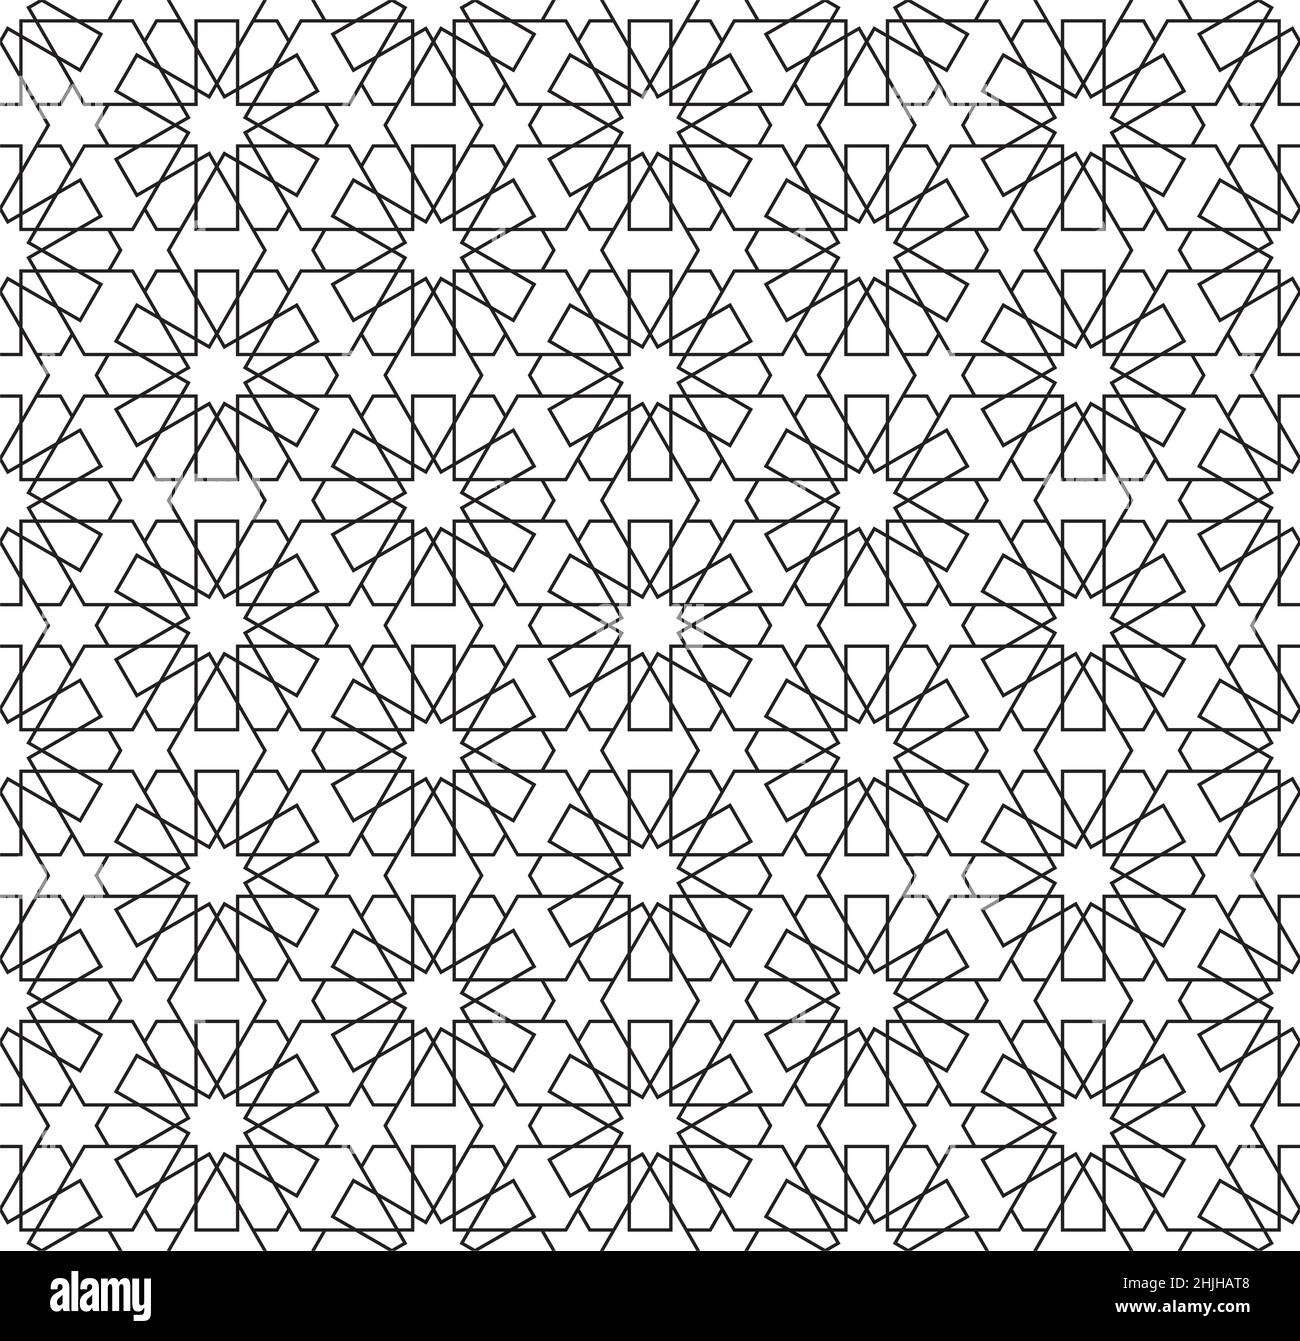 Islamic Geometric Patterns On Fabric